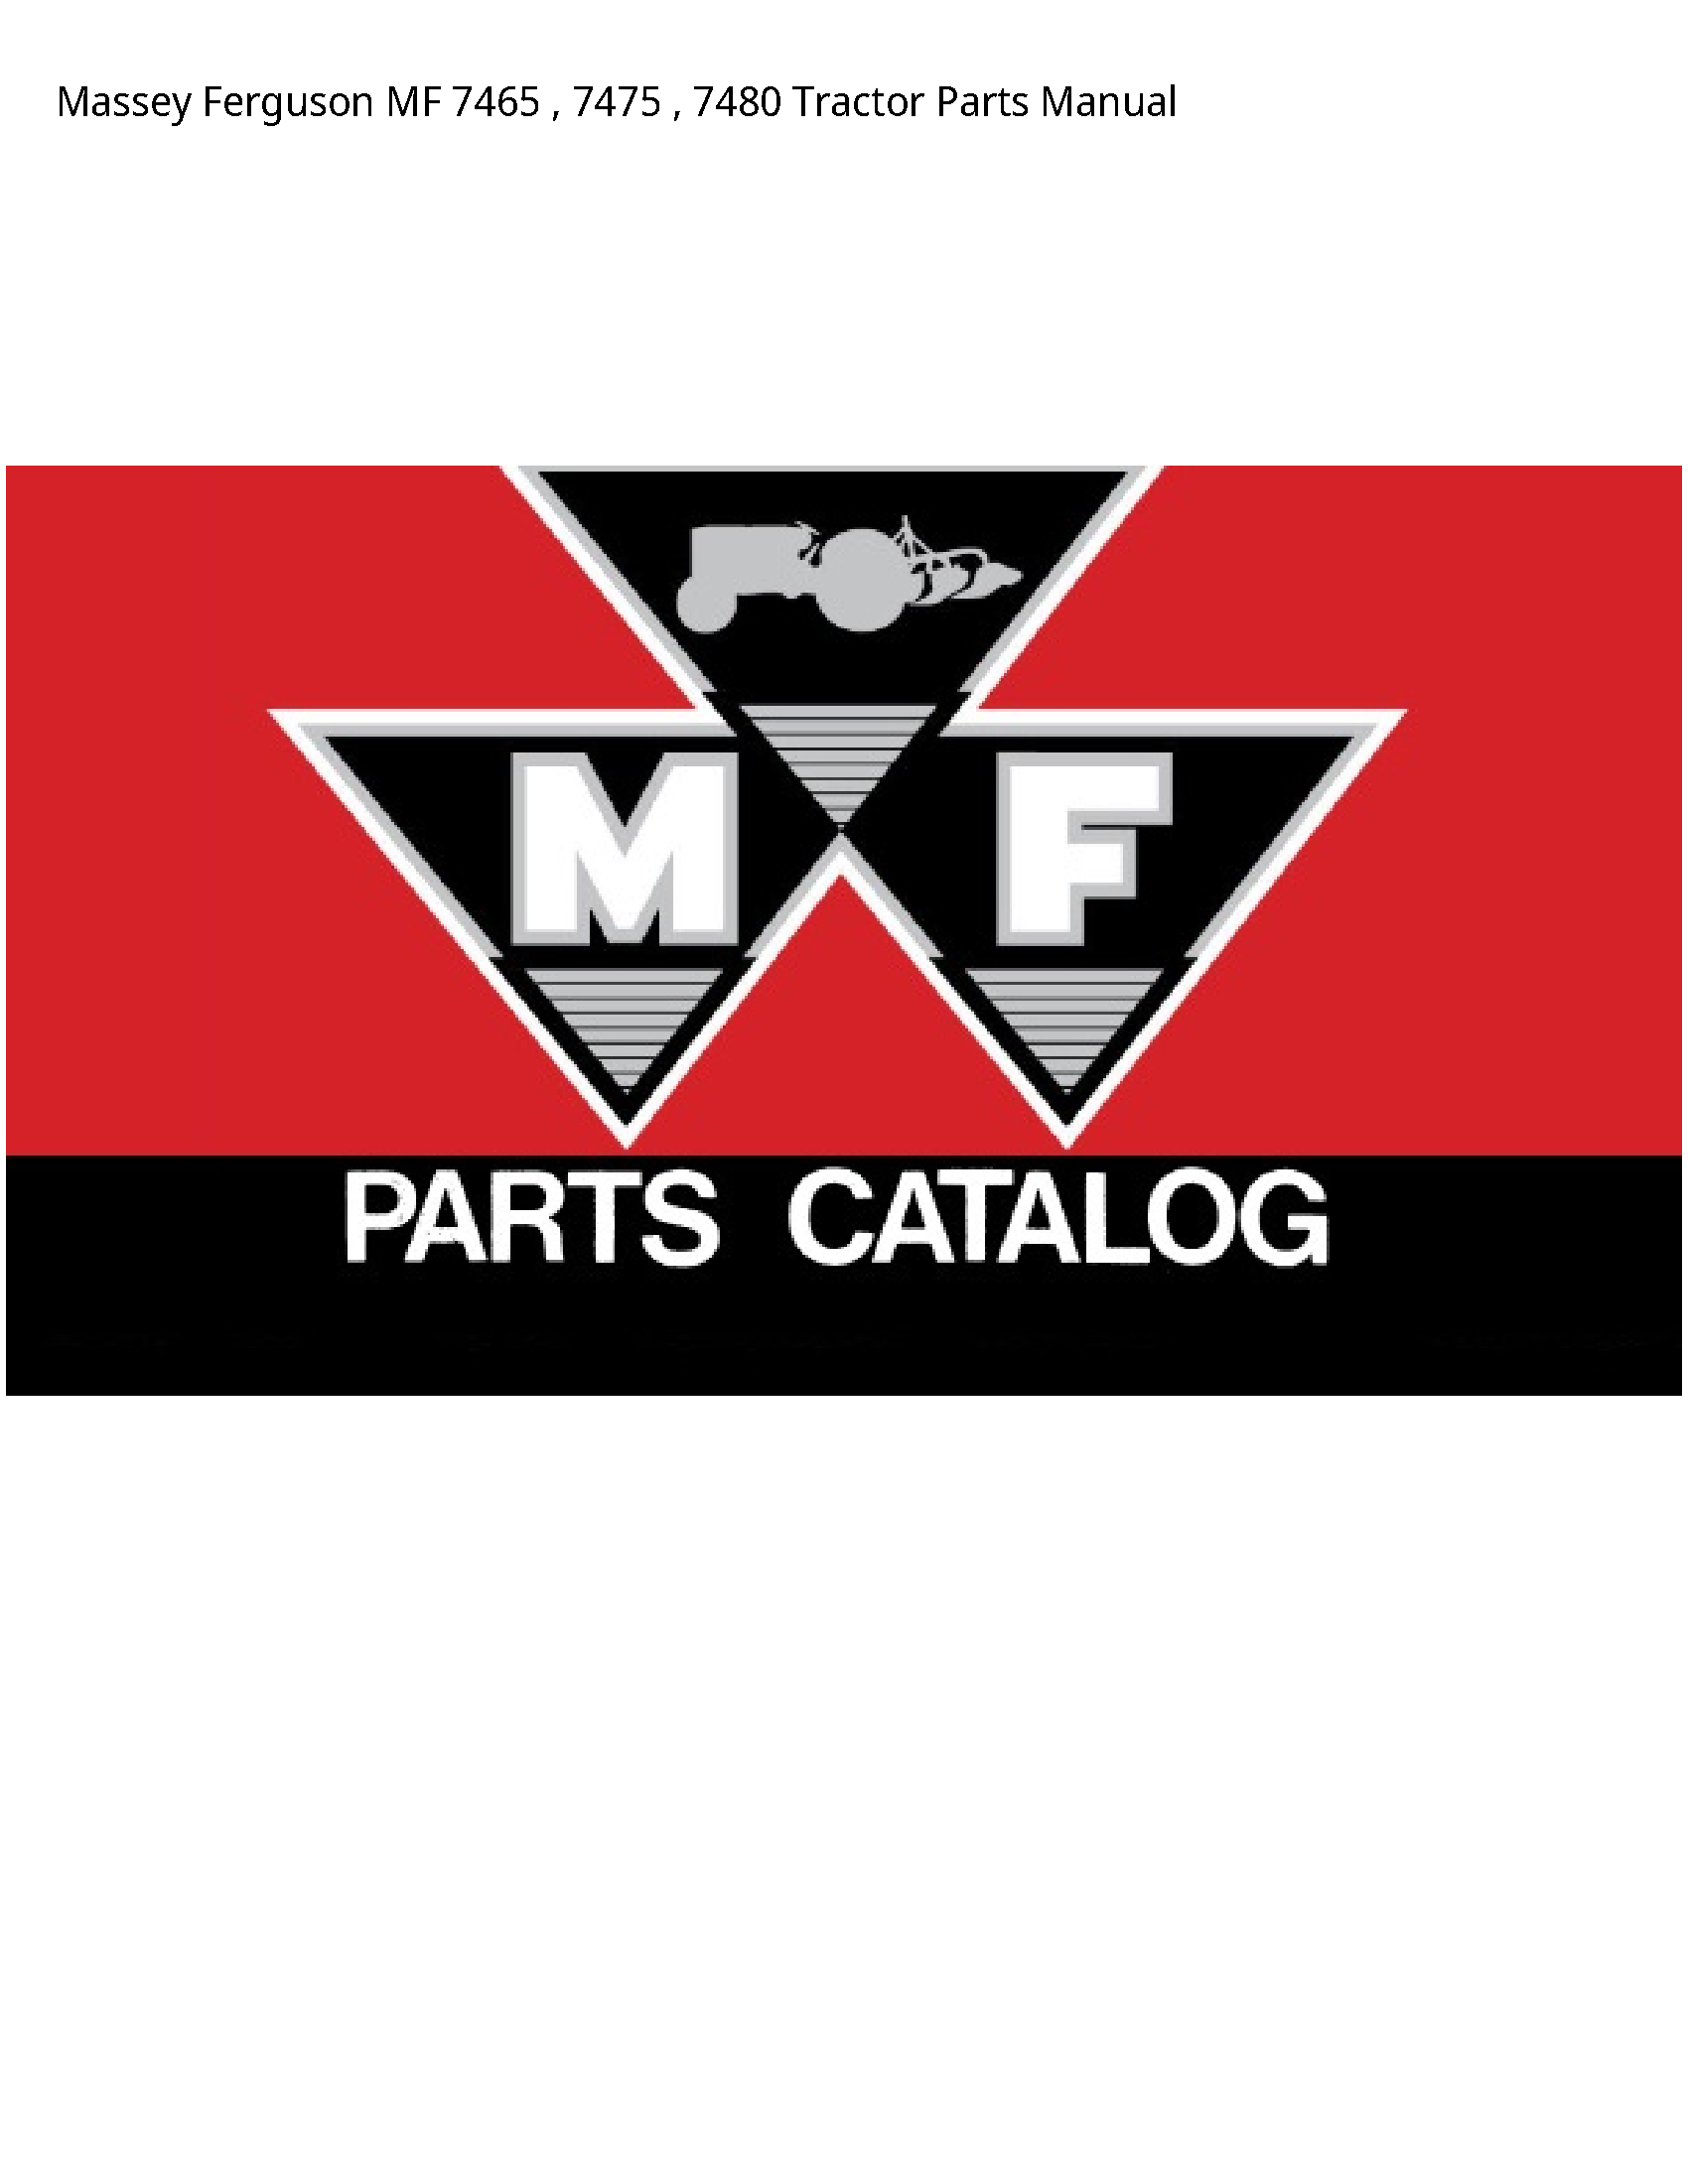 Massey Ferguson 7465 MF Tractor Parts manual